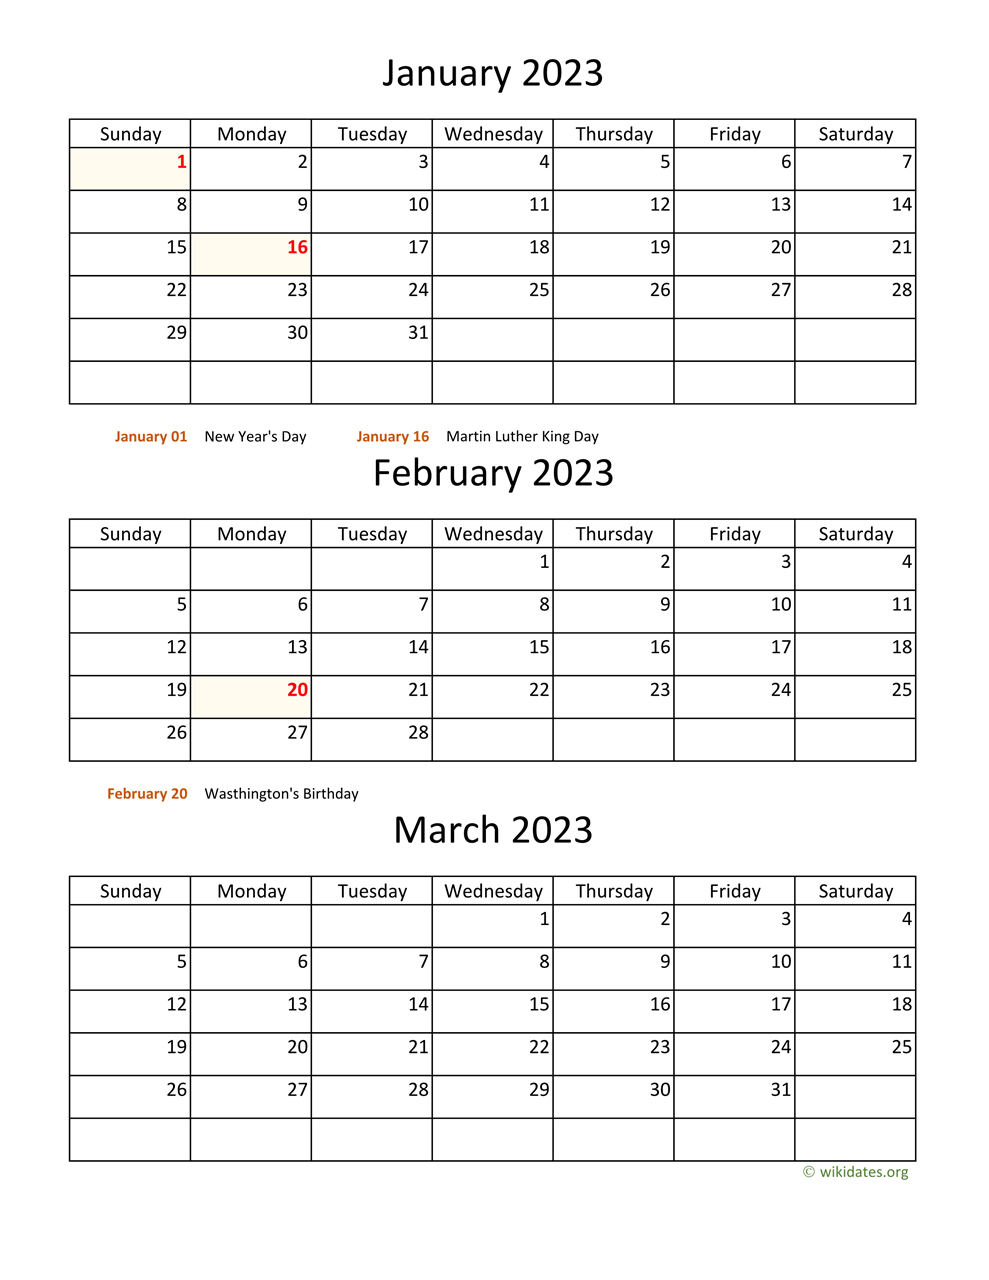 2023 printable mini calendar